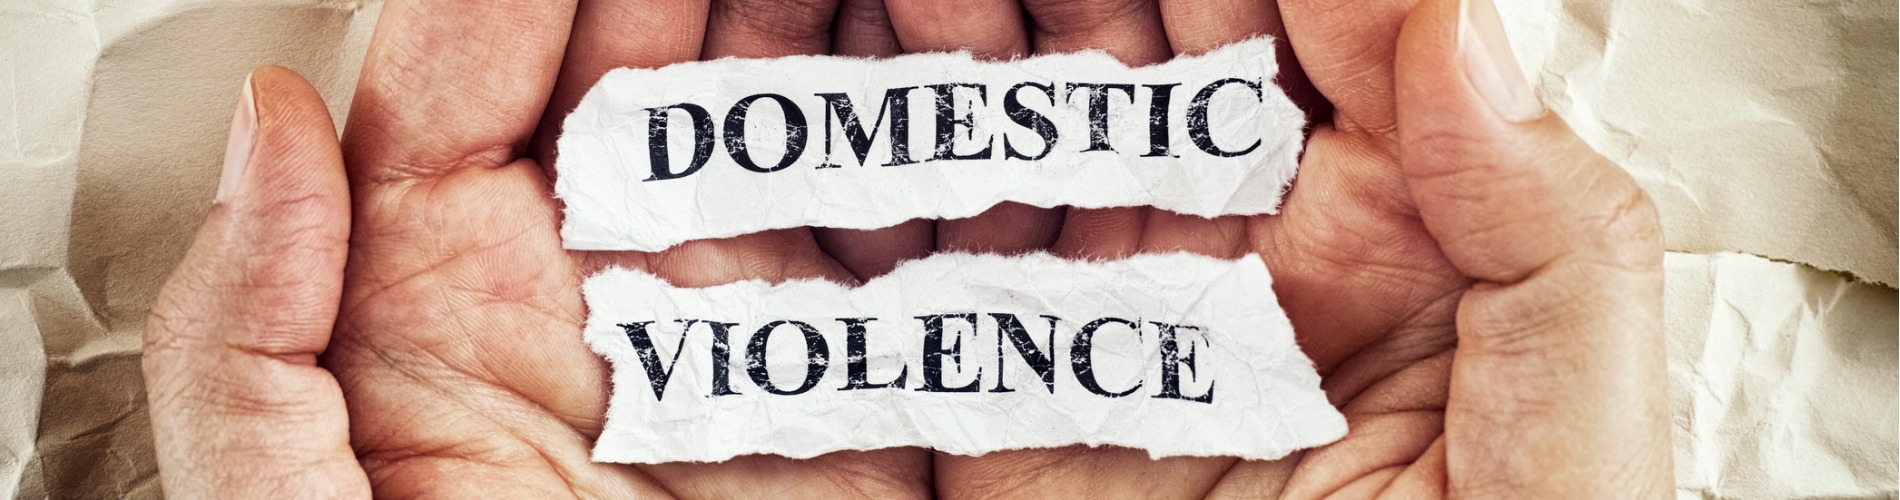 domestic-violence-woman-1900x500